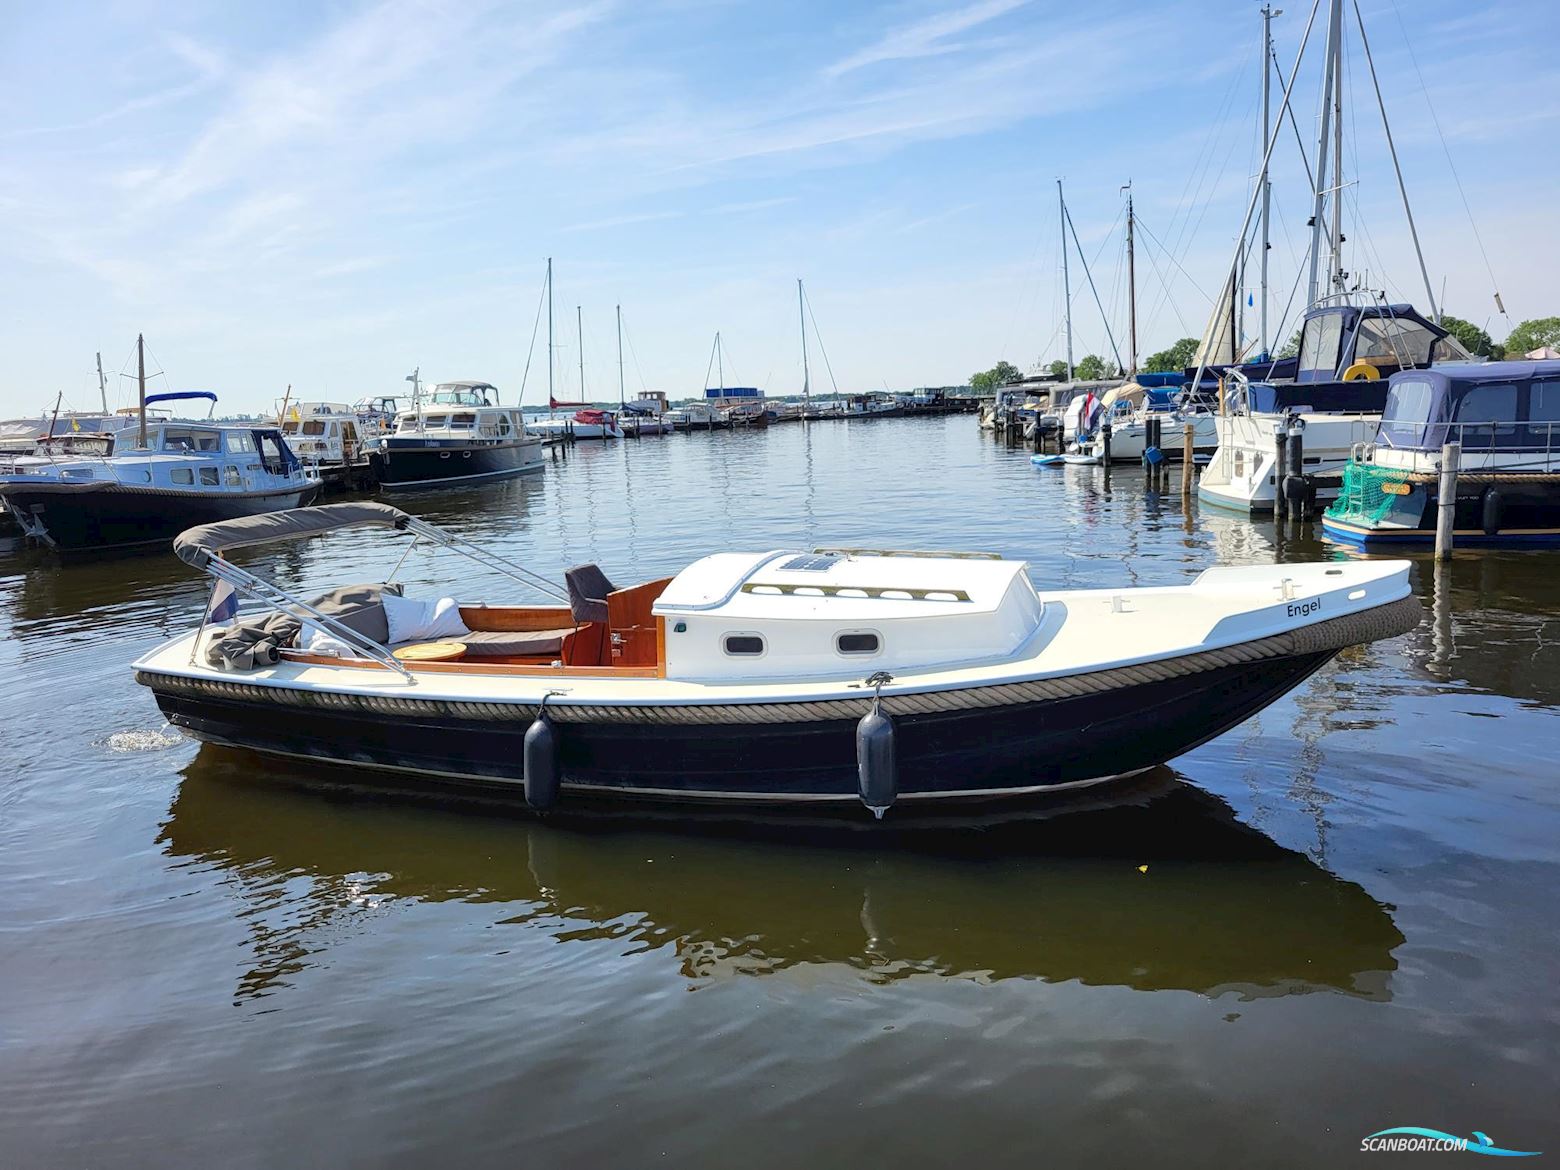 Langenberg Sloep Borndiep Vlet 800 Motor boat 2000, with Sole engine, The Netherlands